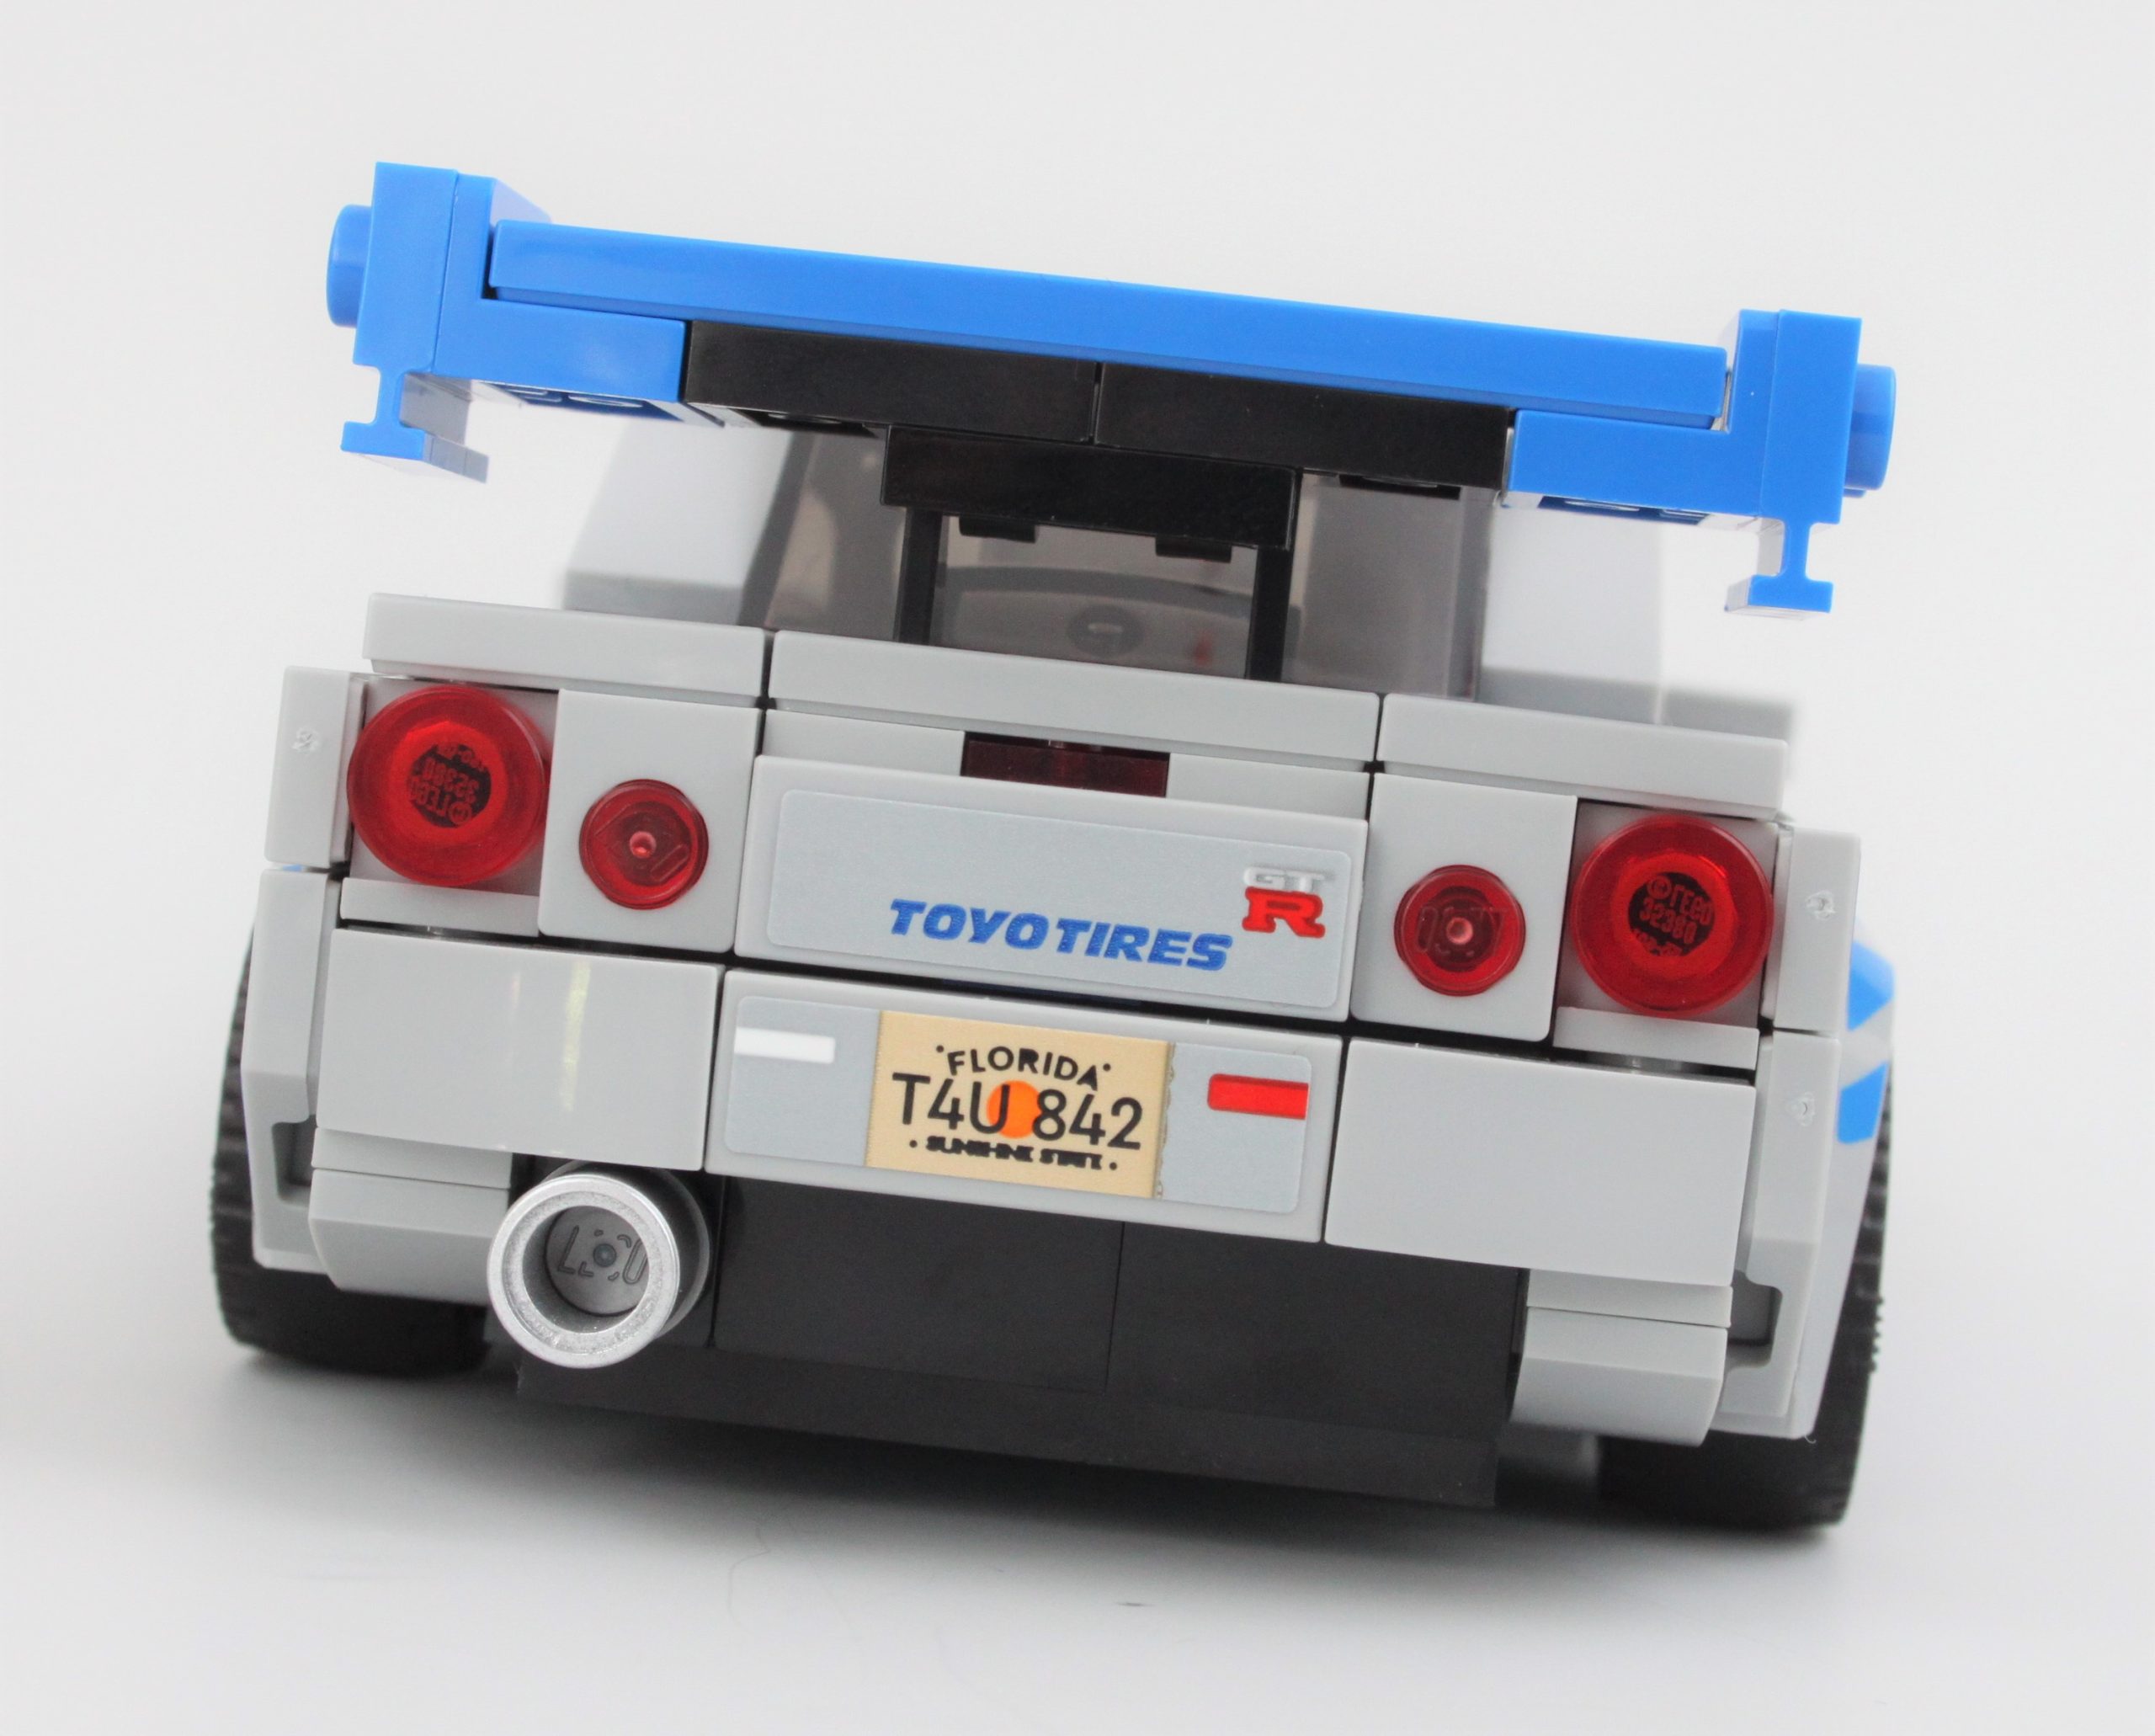 LEGO Speed Champion 76917 Nissan Skyline GT-R 2 Fast 2 Furious